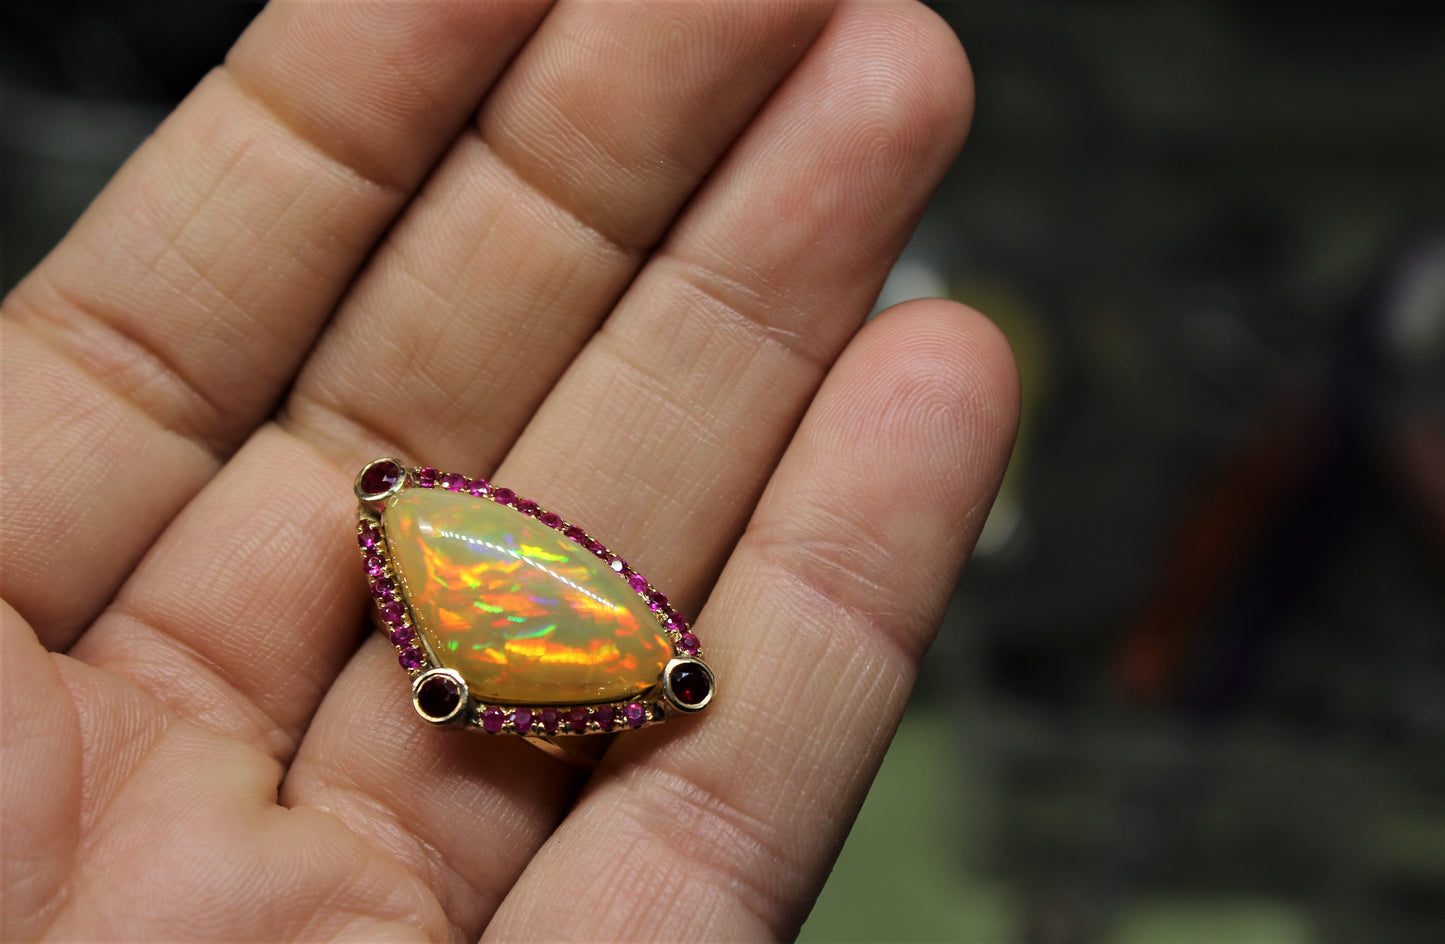 Opal  & Ruby 14k Gold Ring - Gemstone Jewelry #238